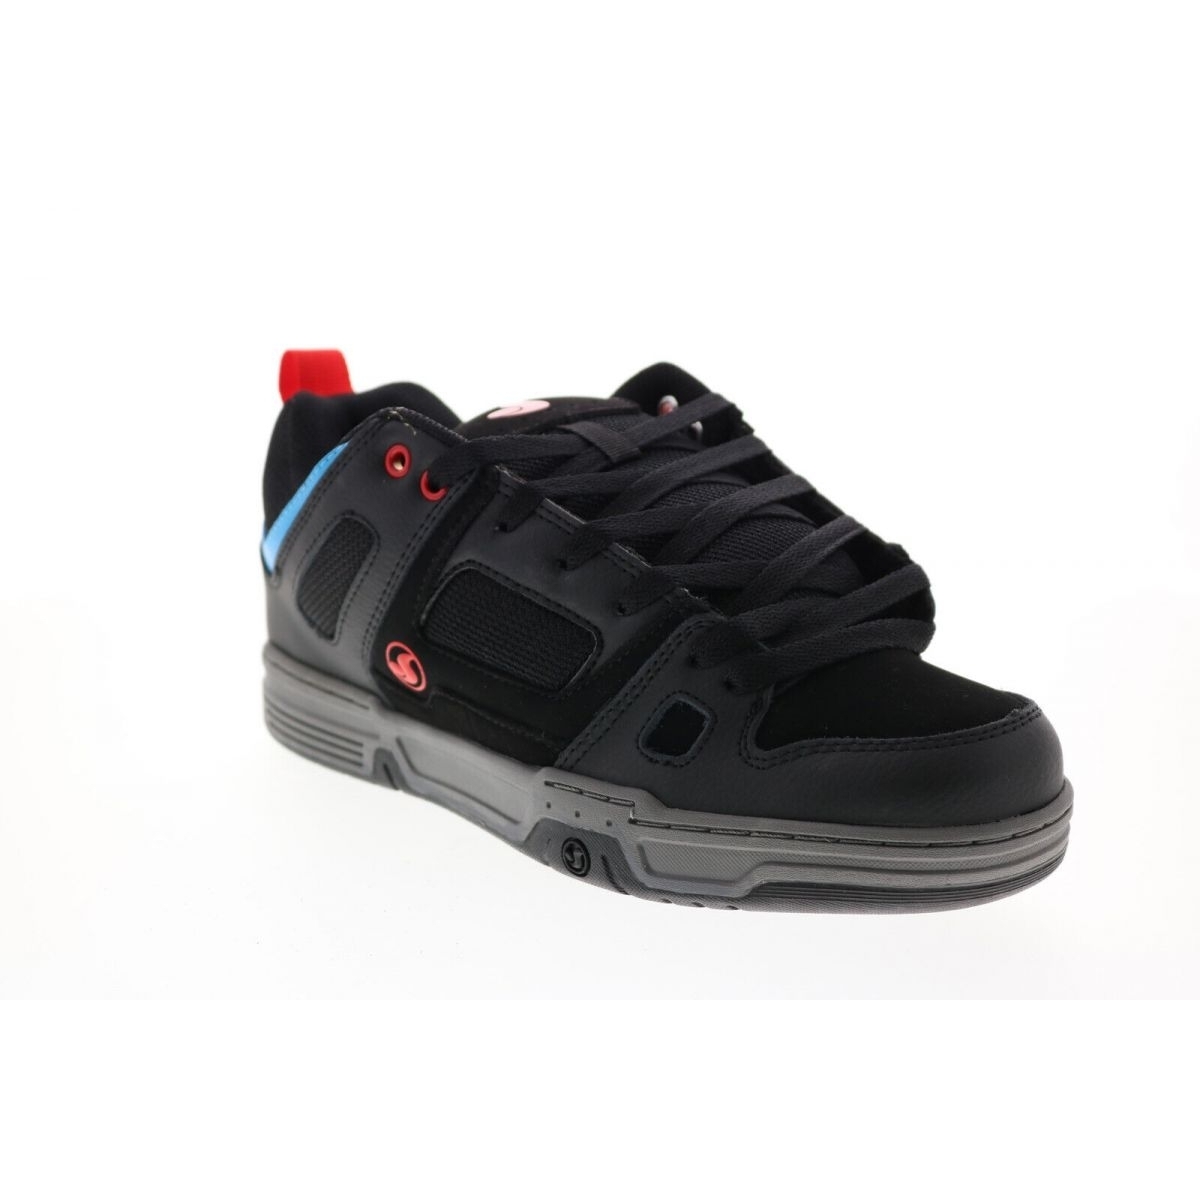 DVS Men's Gambol Skate Shoe 0 BLACK FIERY RED BLUE NUBUCK - BLACK FIERY RED BLUE NUBUCK, 6.5